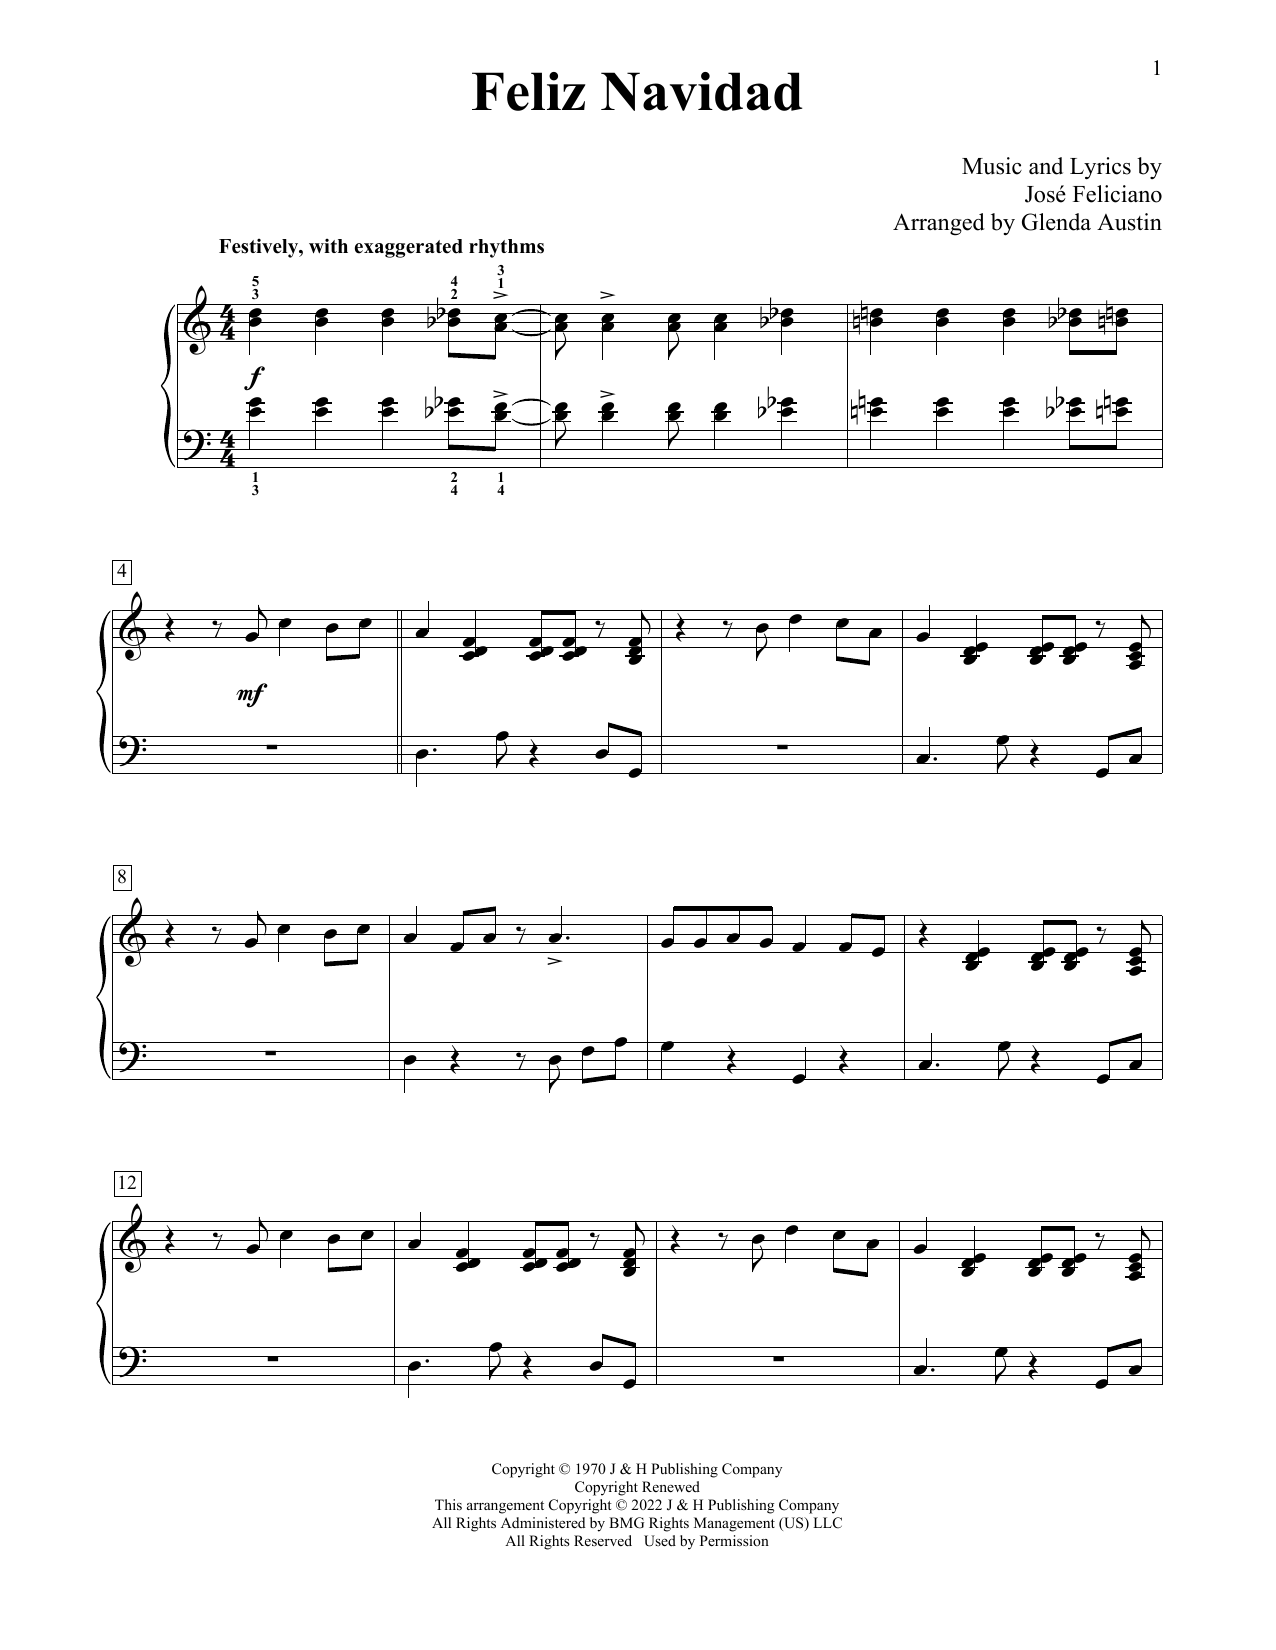 Download Jose Feliciano Feliz Navidad (arr. Glenda Austin) Sheet Music and learn how to play Educational Piano PDF digital score in minutes